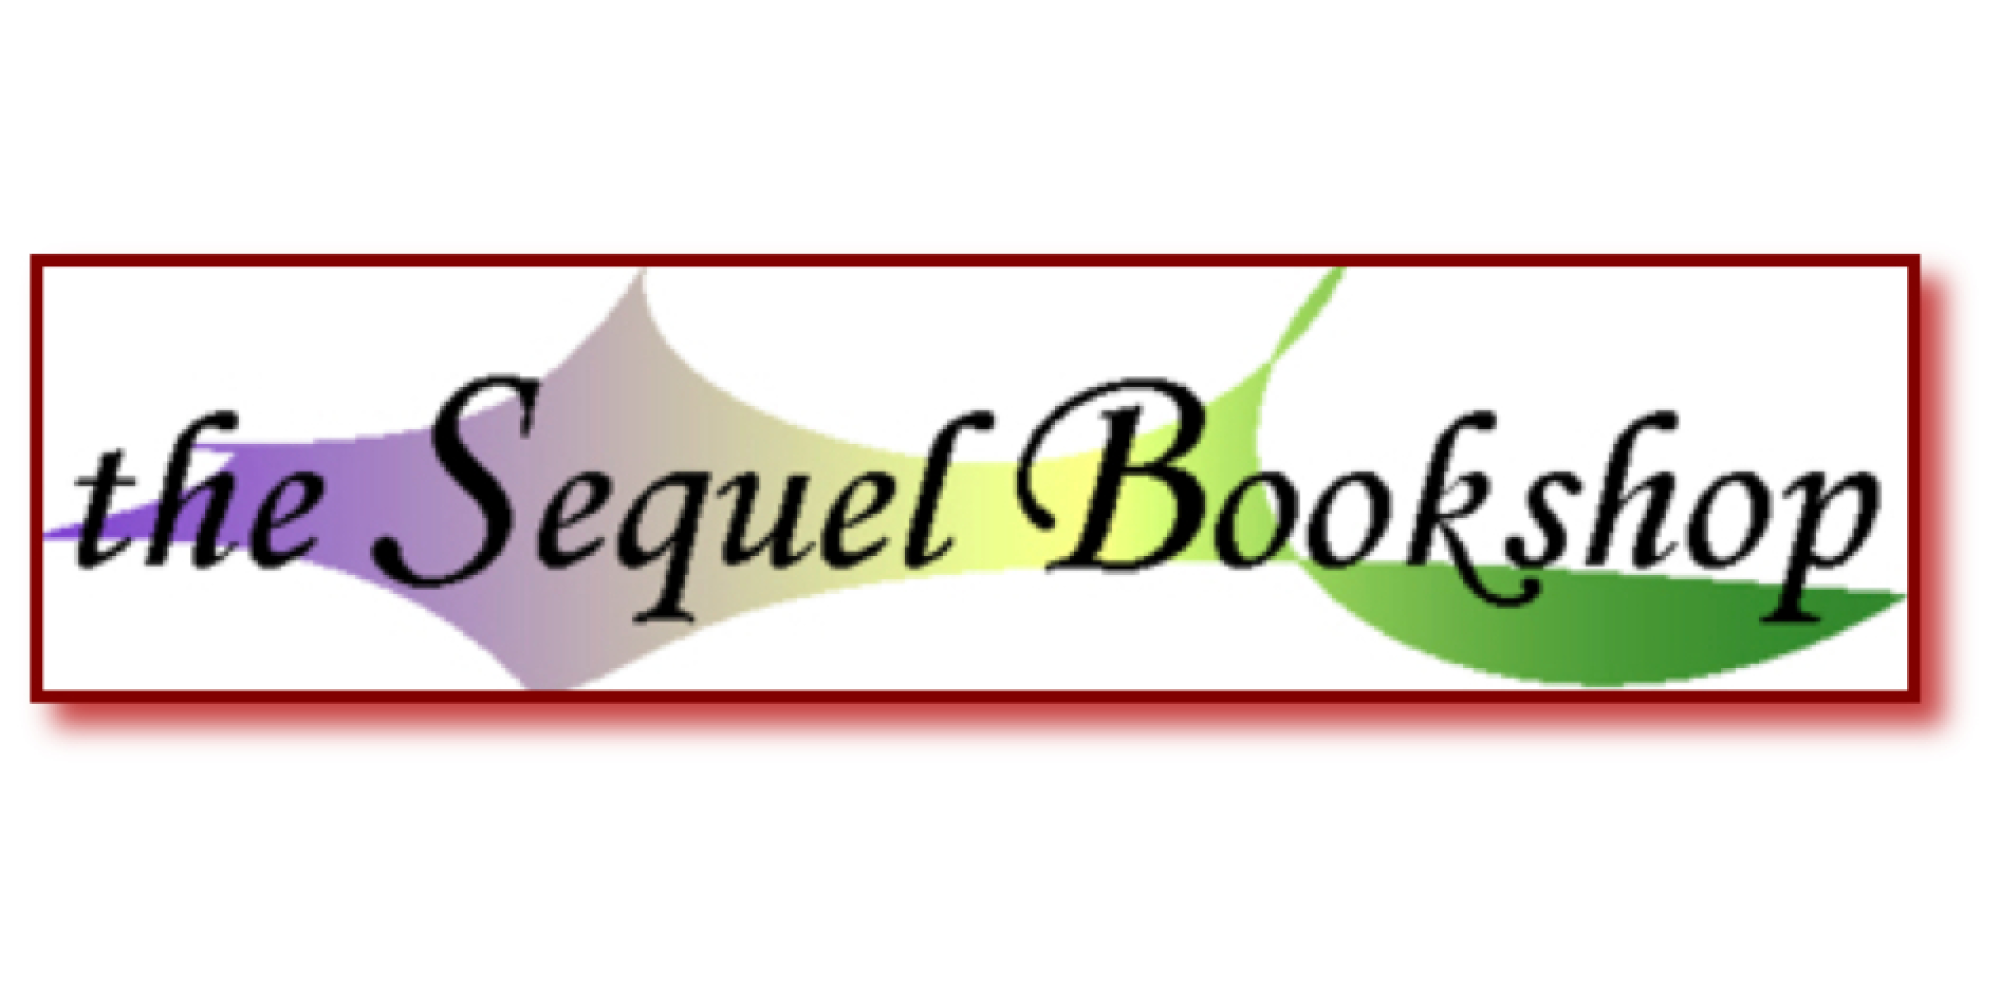 The Sequel Bookshop LLC